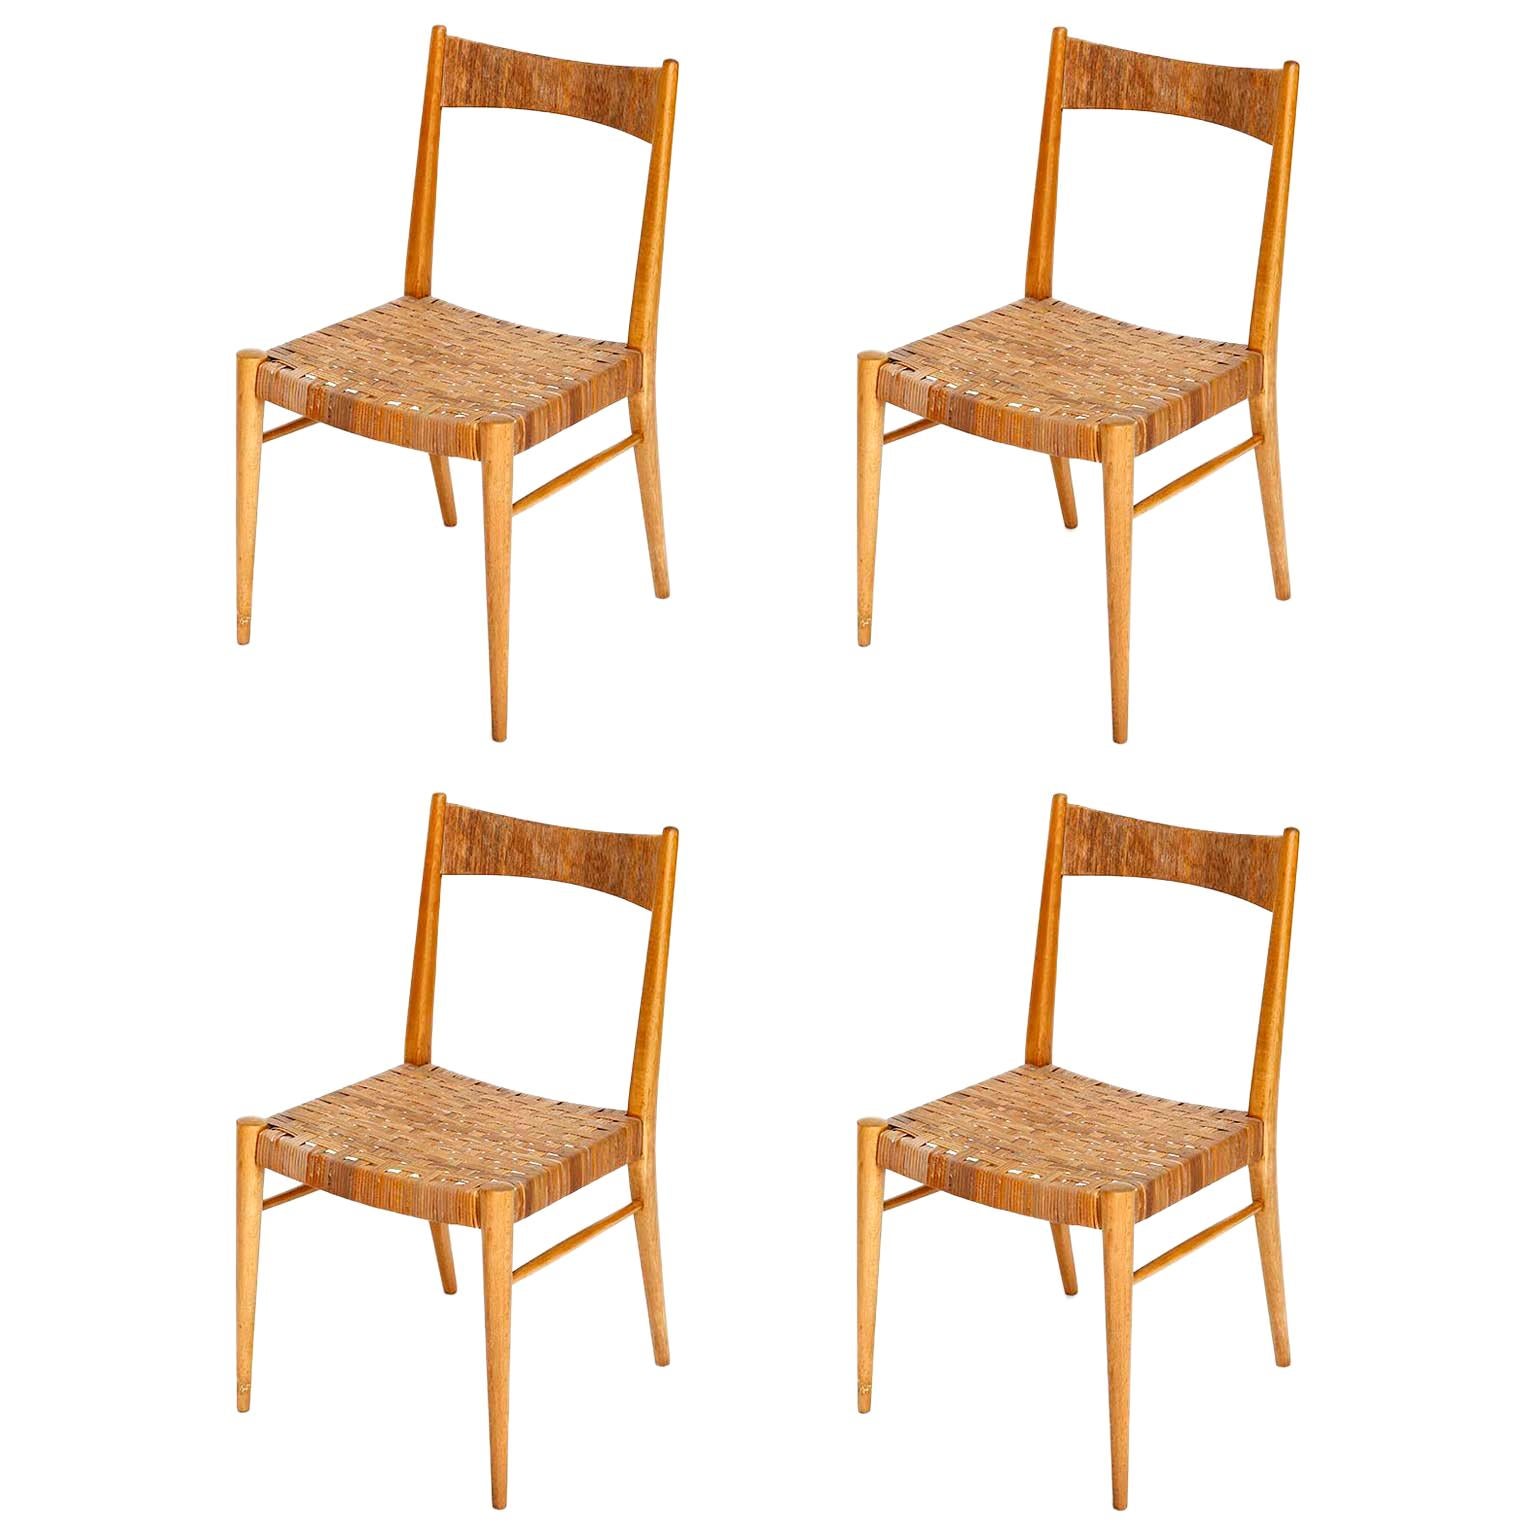 Four Anna-Lülja Praun Chairs, Wood Wicker Cane, 1950s